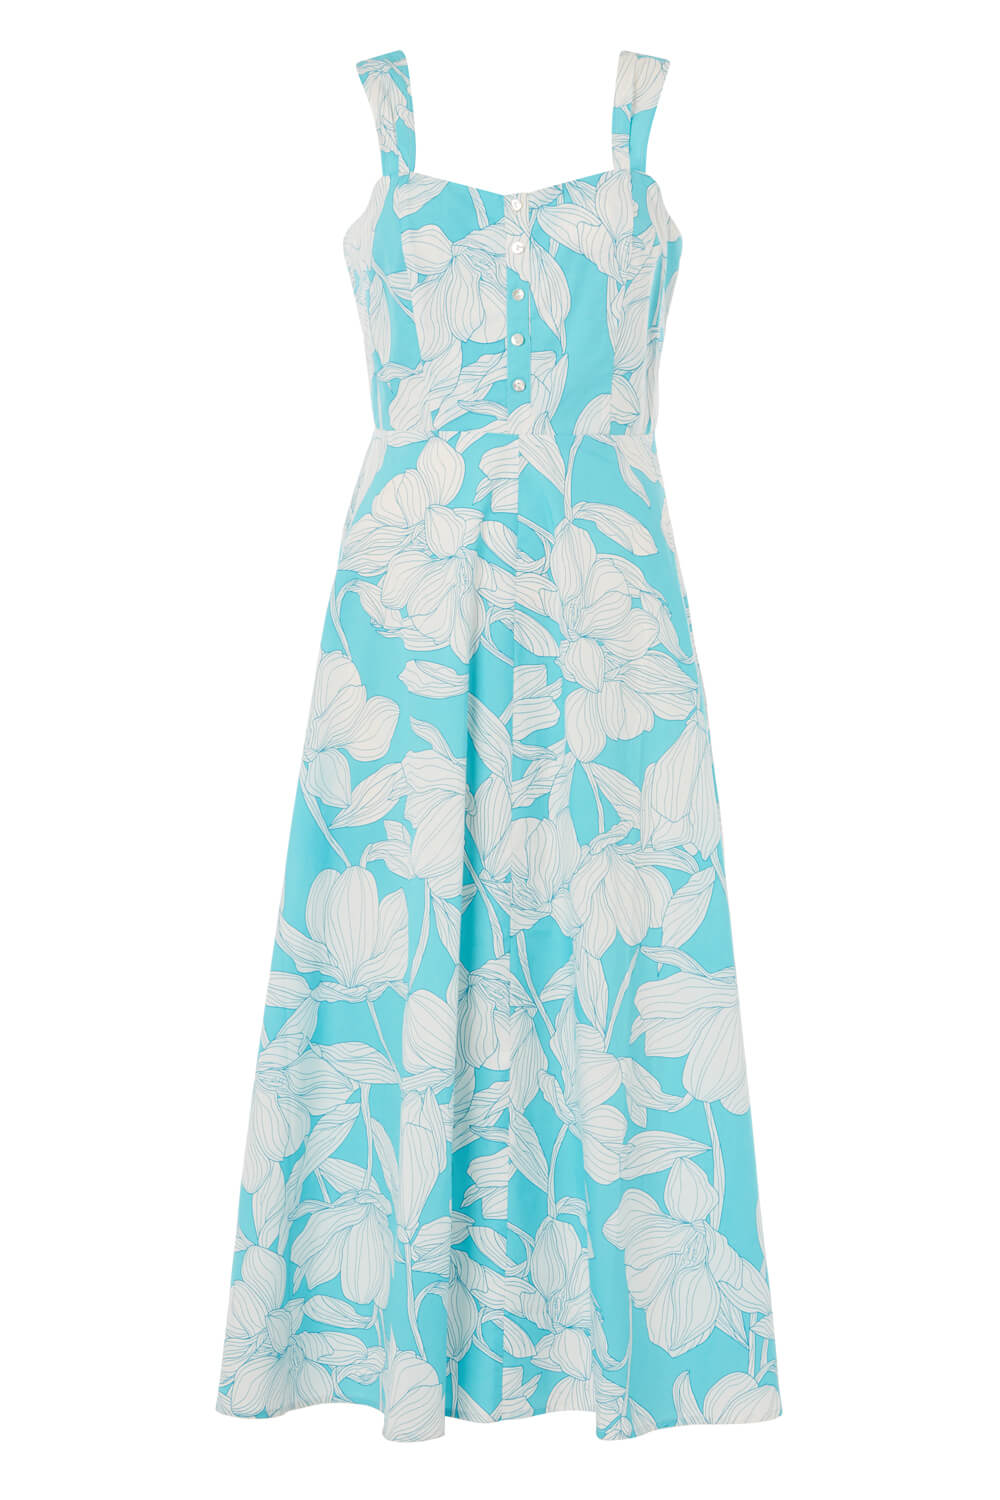 Turquoise Floral Cotton Midi Sun Dress, Image 5 of 5